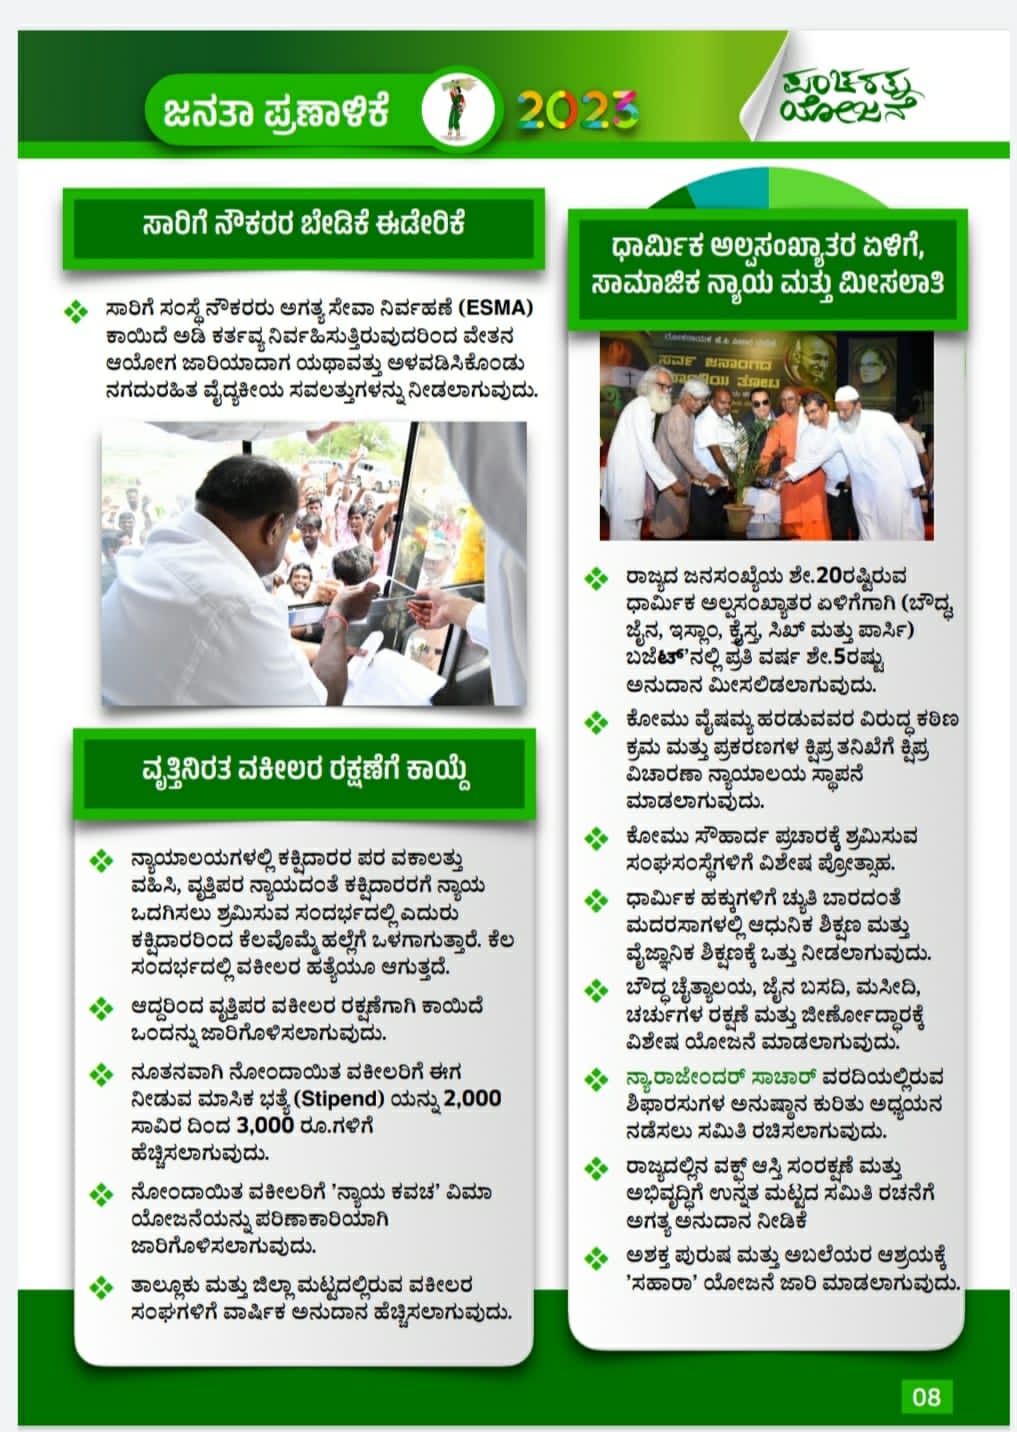 Karnataka elections: JDS manifesto released